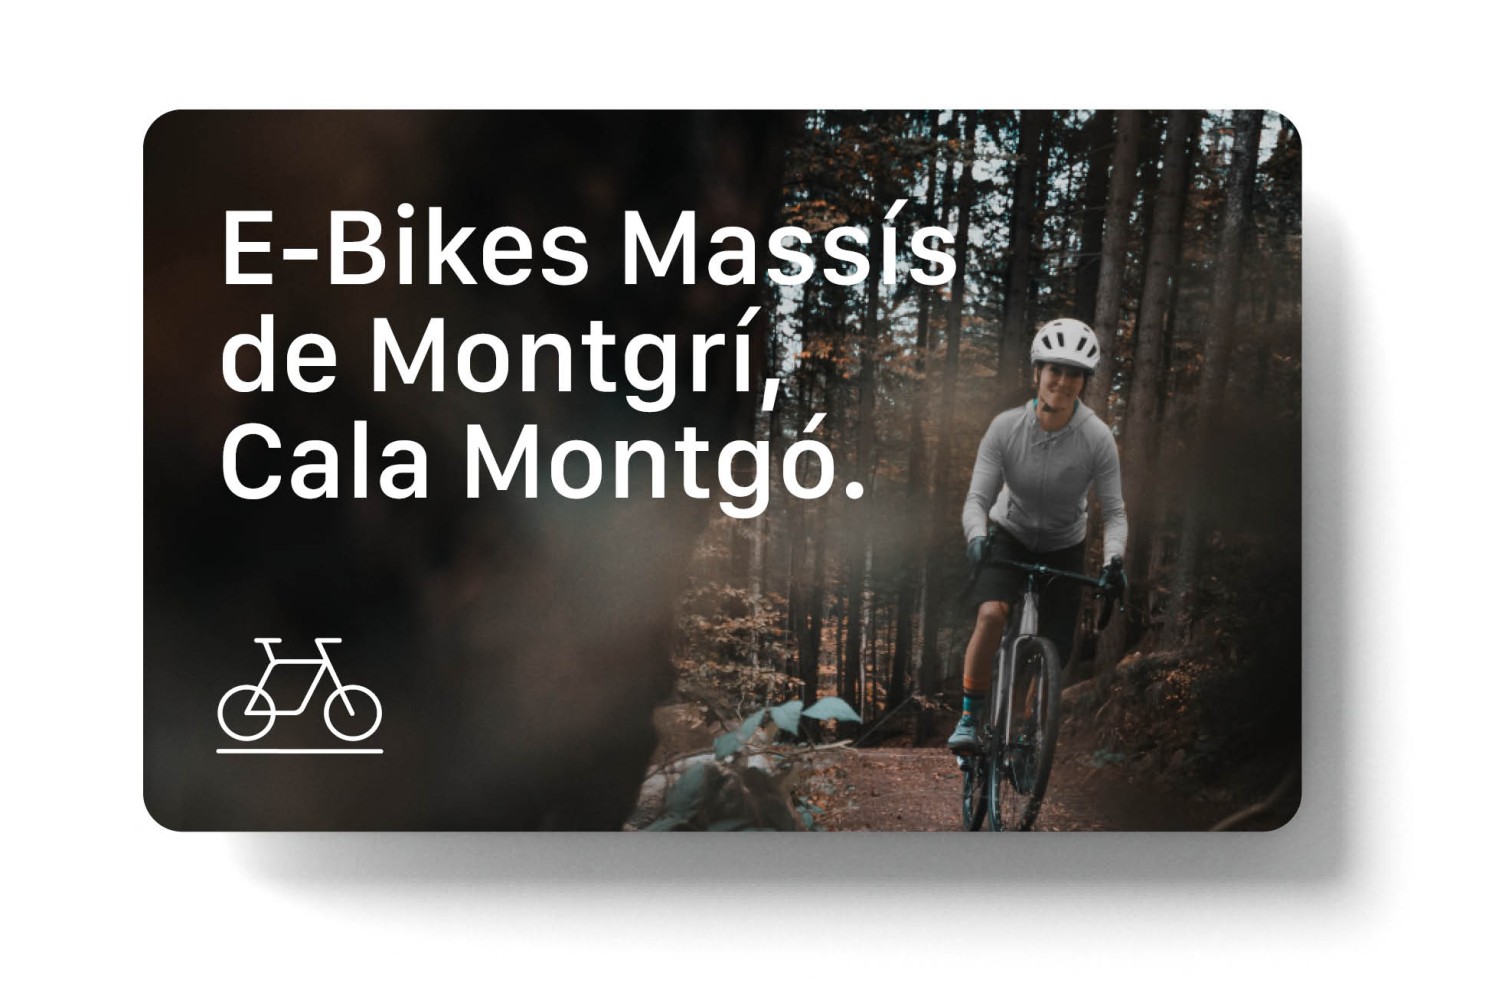 E-Bike route through the Massís del Montgrí